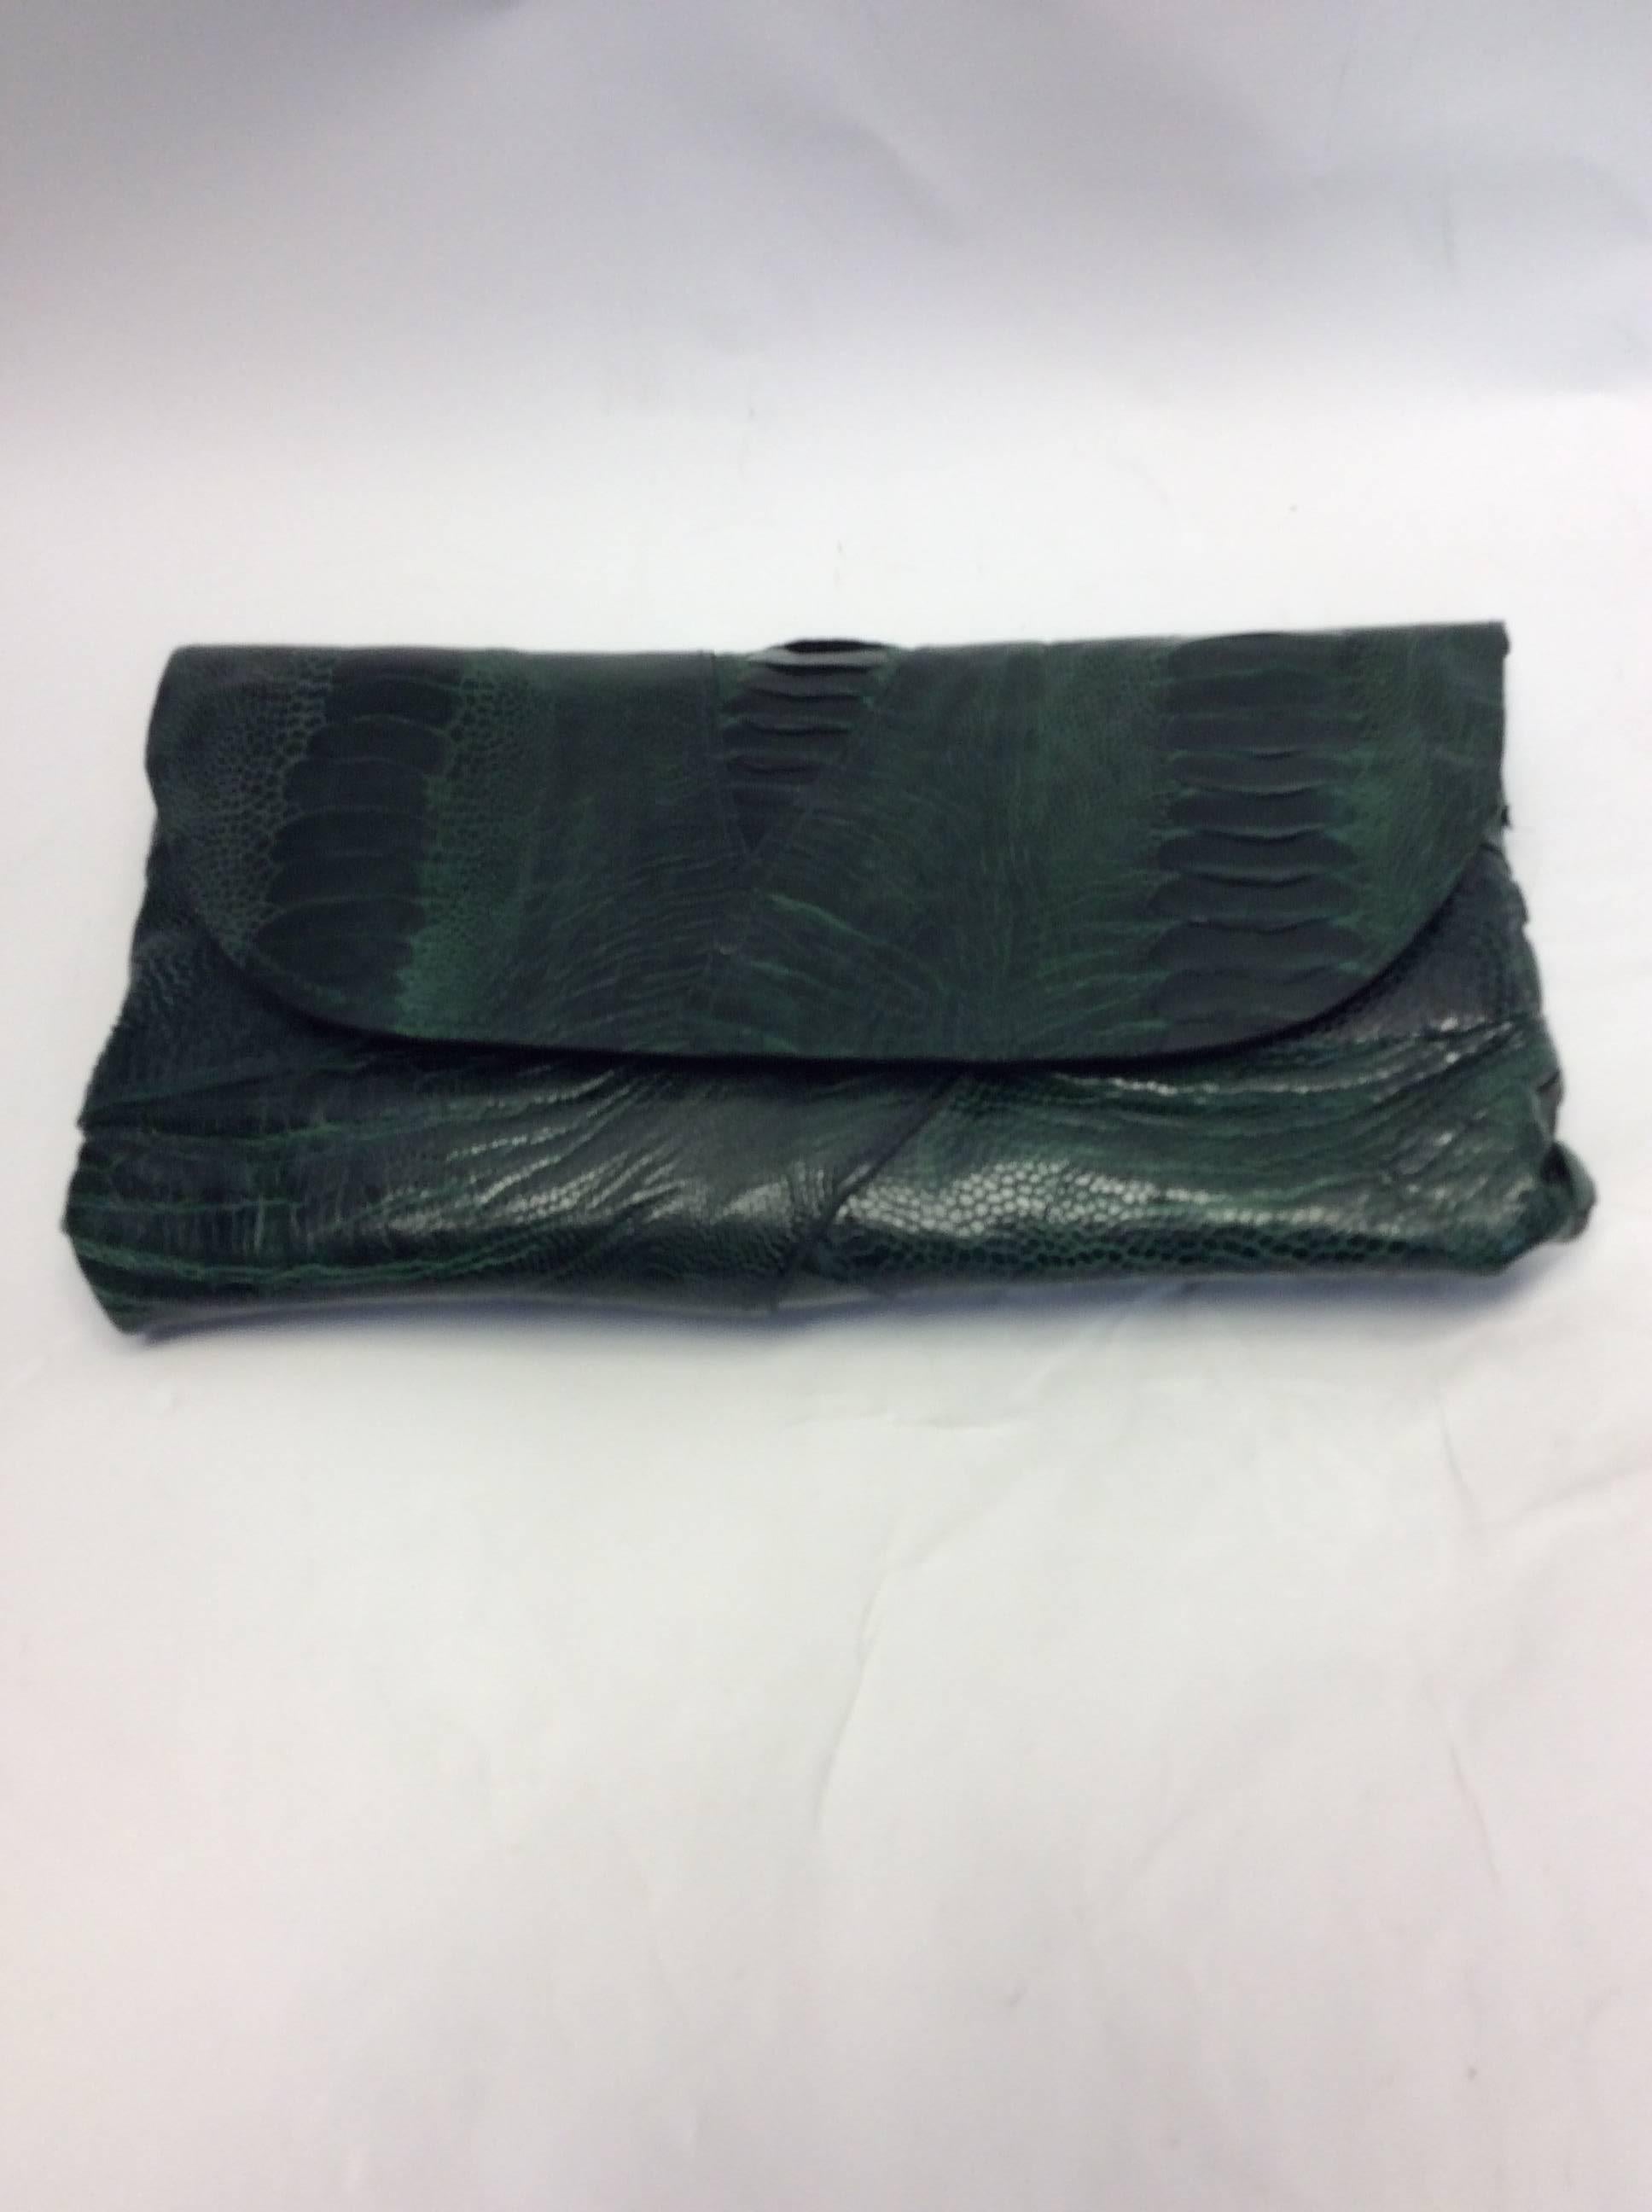 Deb Barnett Green Crocodile Skin Clutch
Fold over clutch 
$399
10X6X2